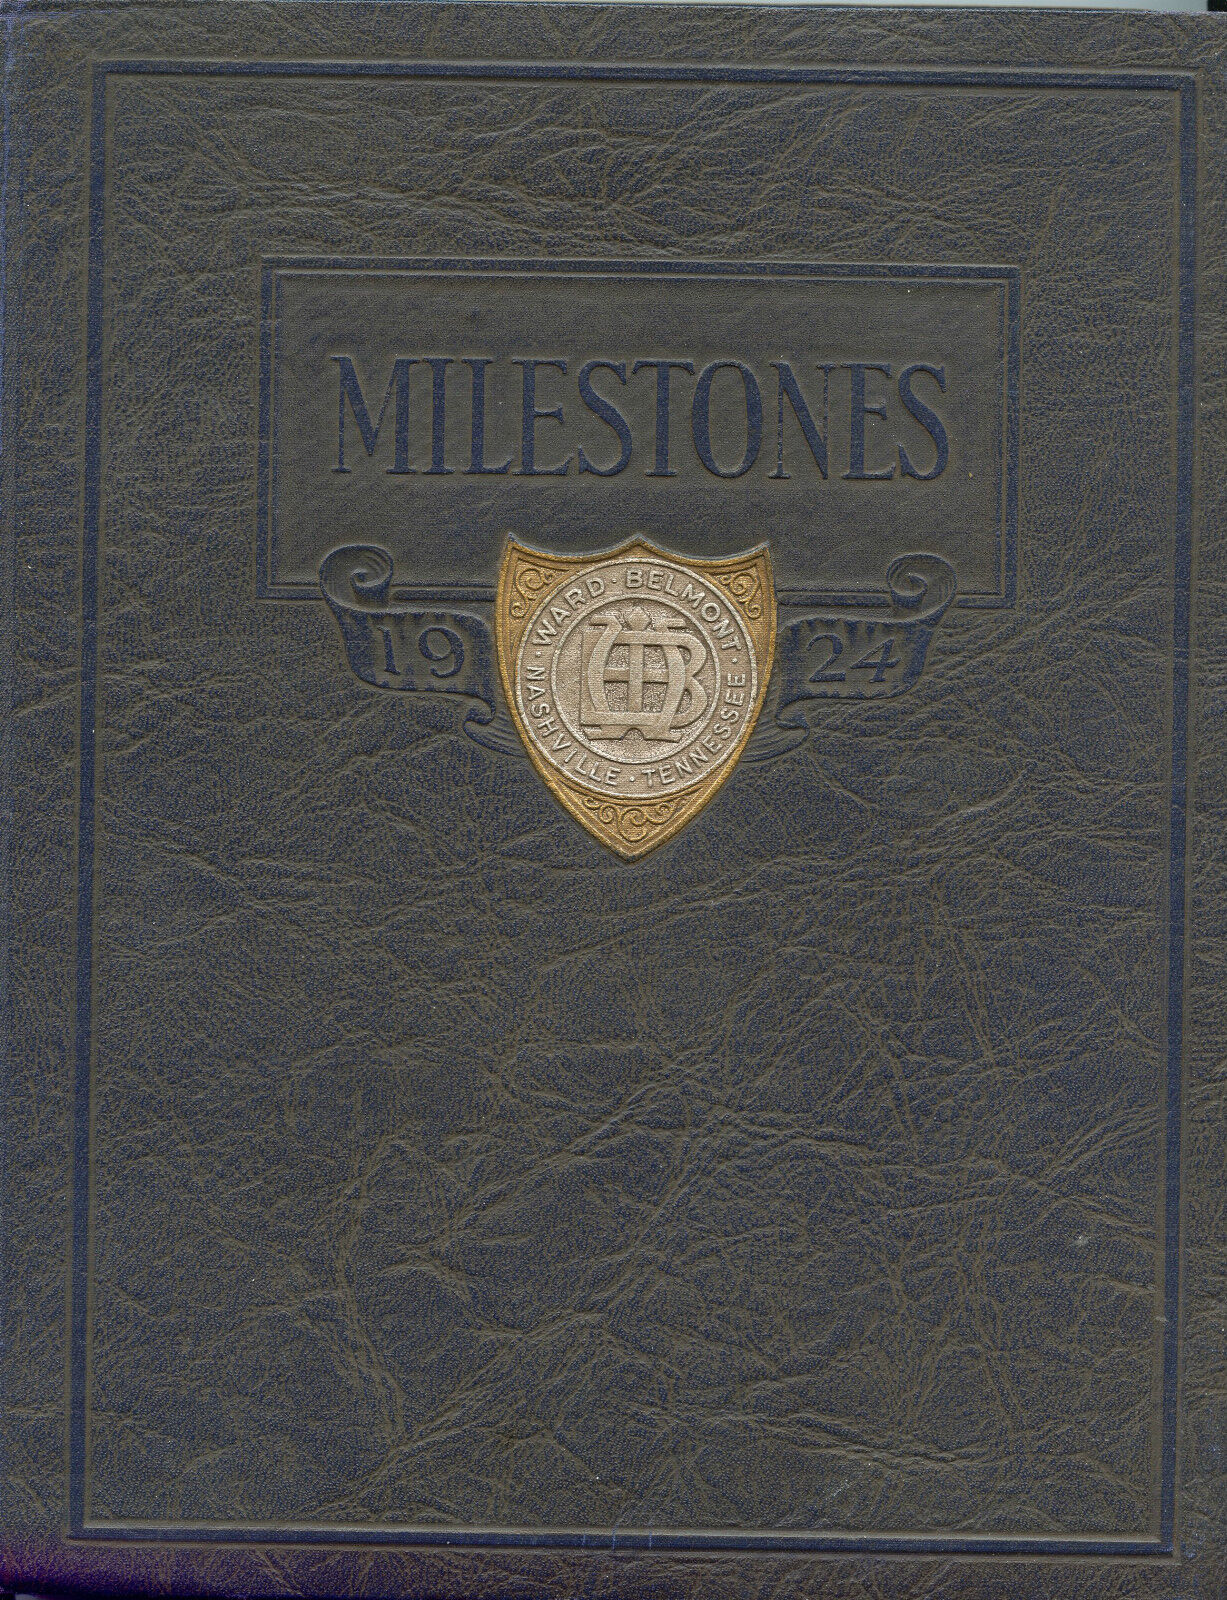 1924 Nashville Tennessee Yearbook - Ward Belmont School - Milestones